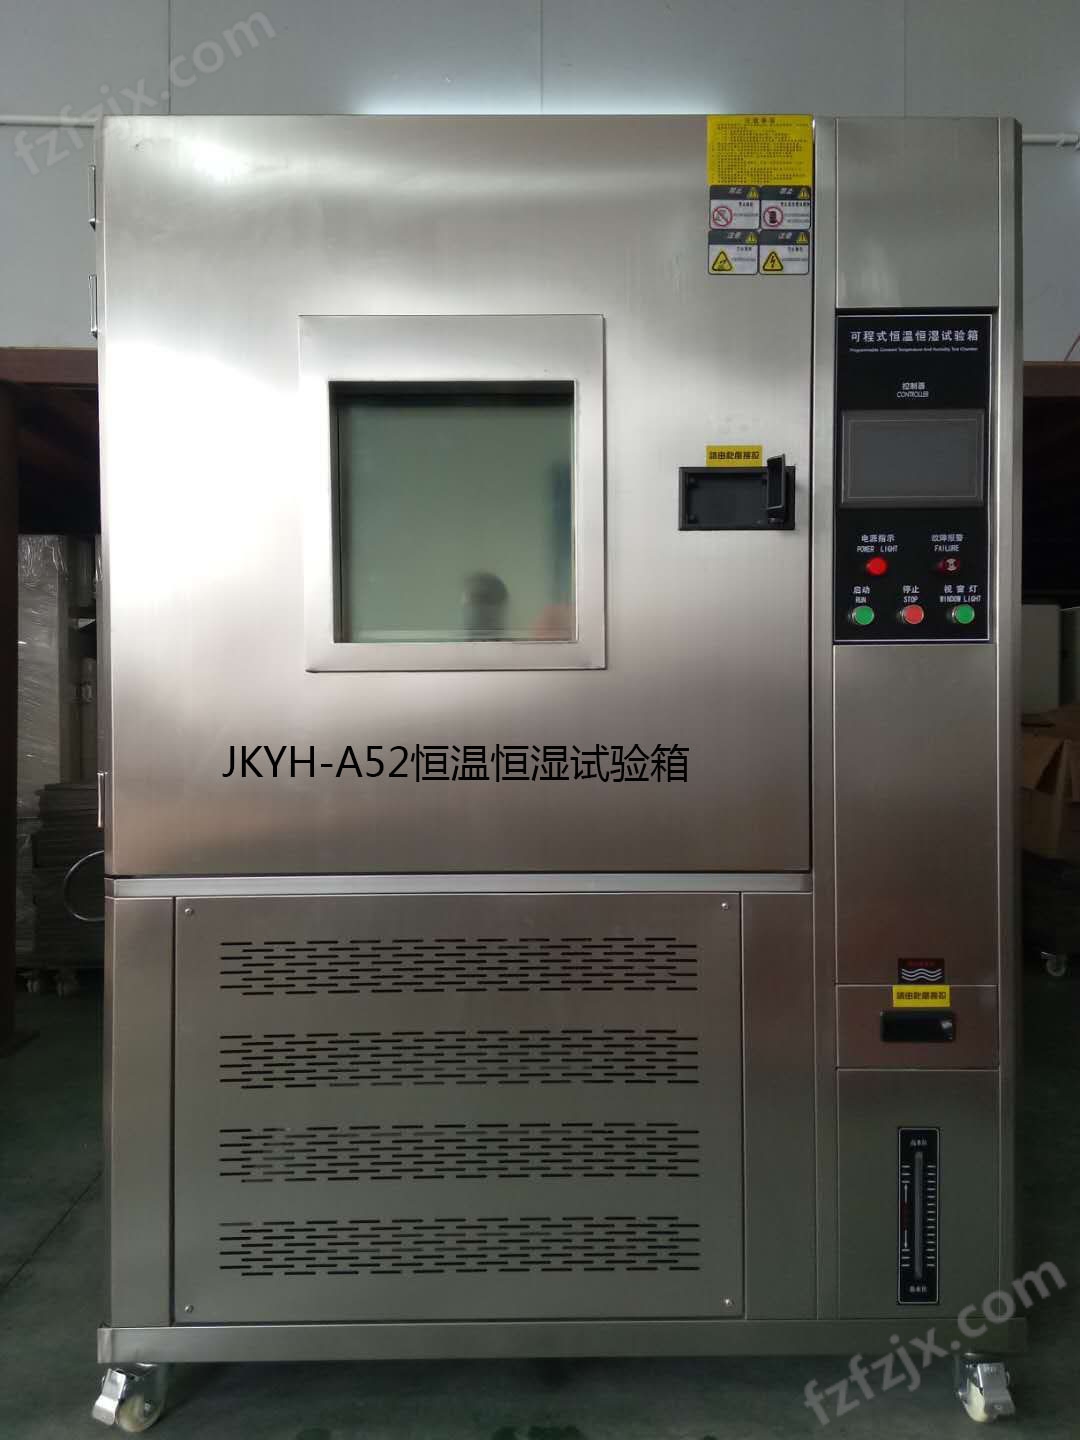 JKYH-A52恒温恒湿试验箱